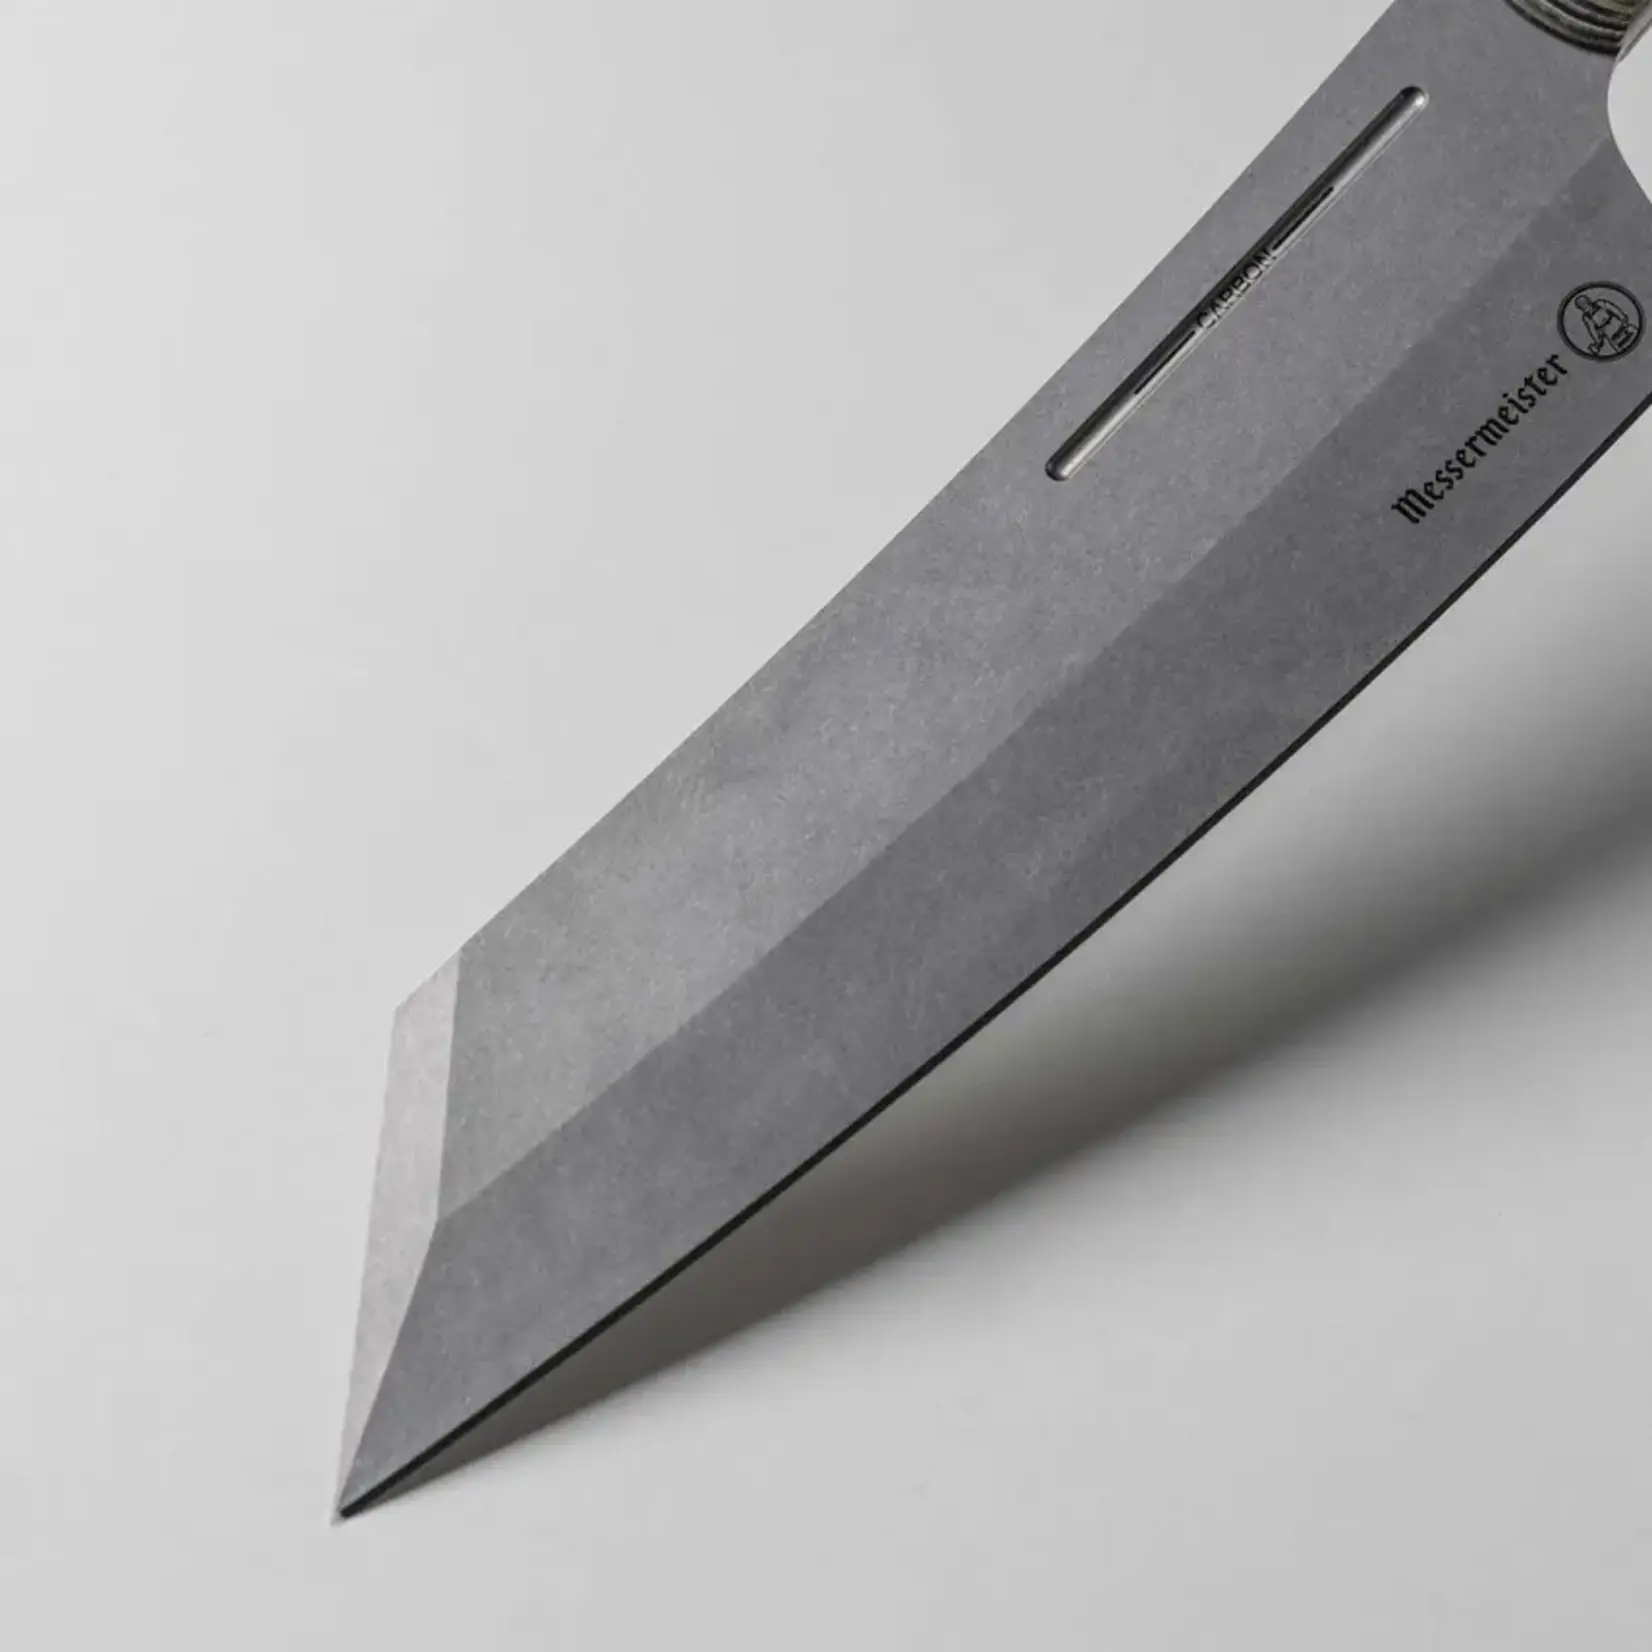 Messermeister Messermister 8" Carbon Steel Bunka Chef's Knife